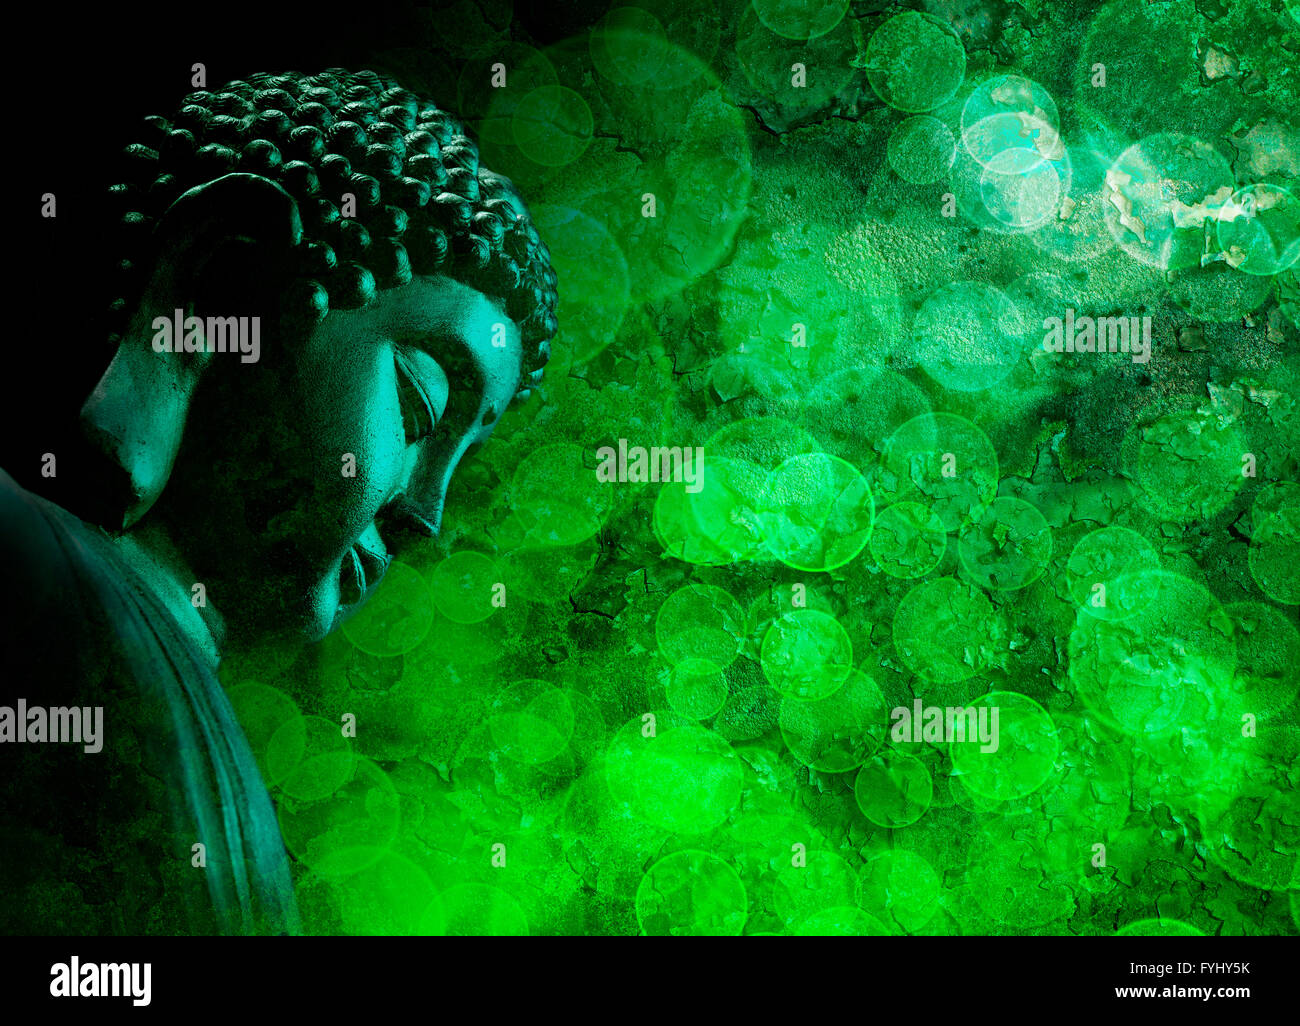 Bronze Zen Buddha Statue Meditating with Blurred Textured Green Background Stock Photo